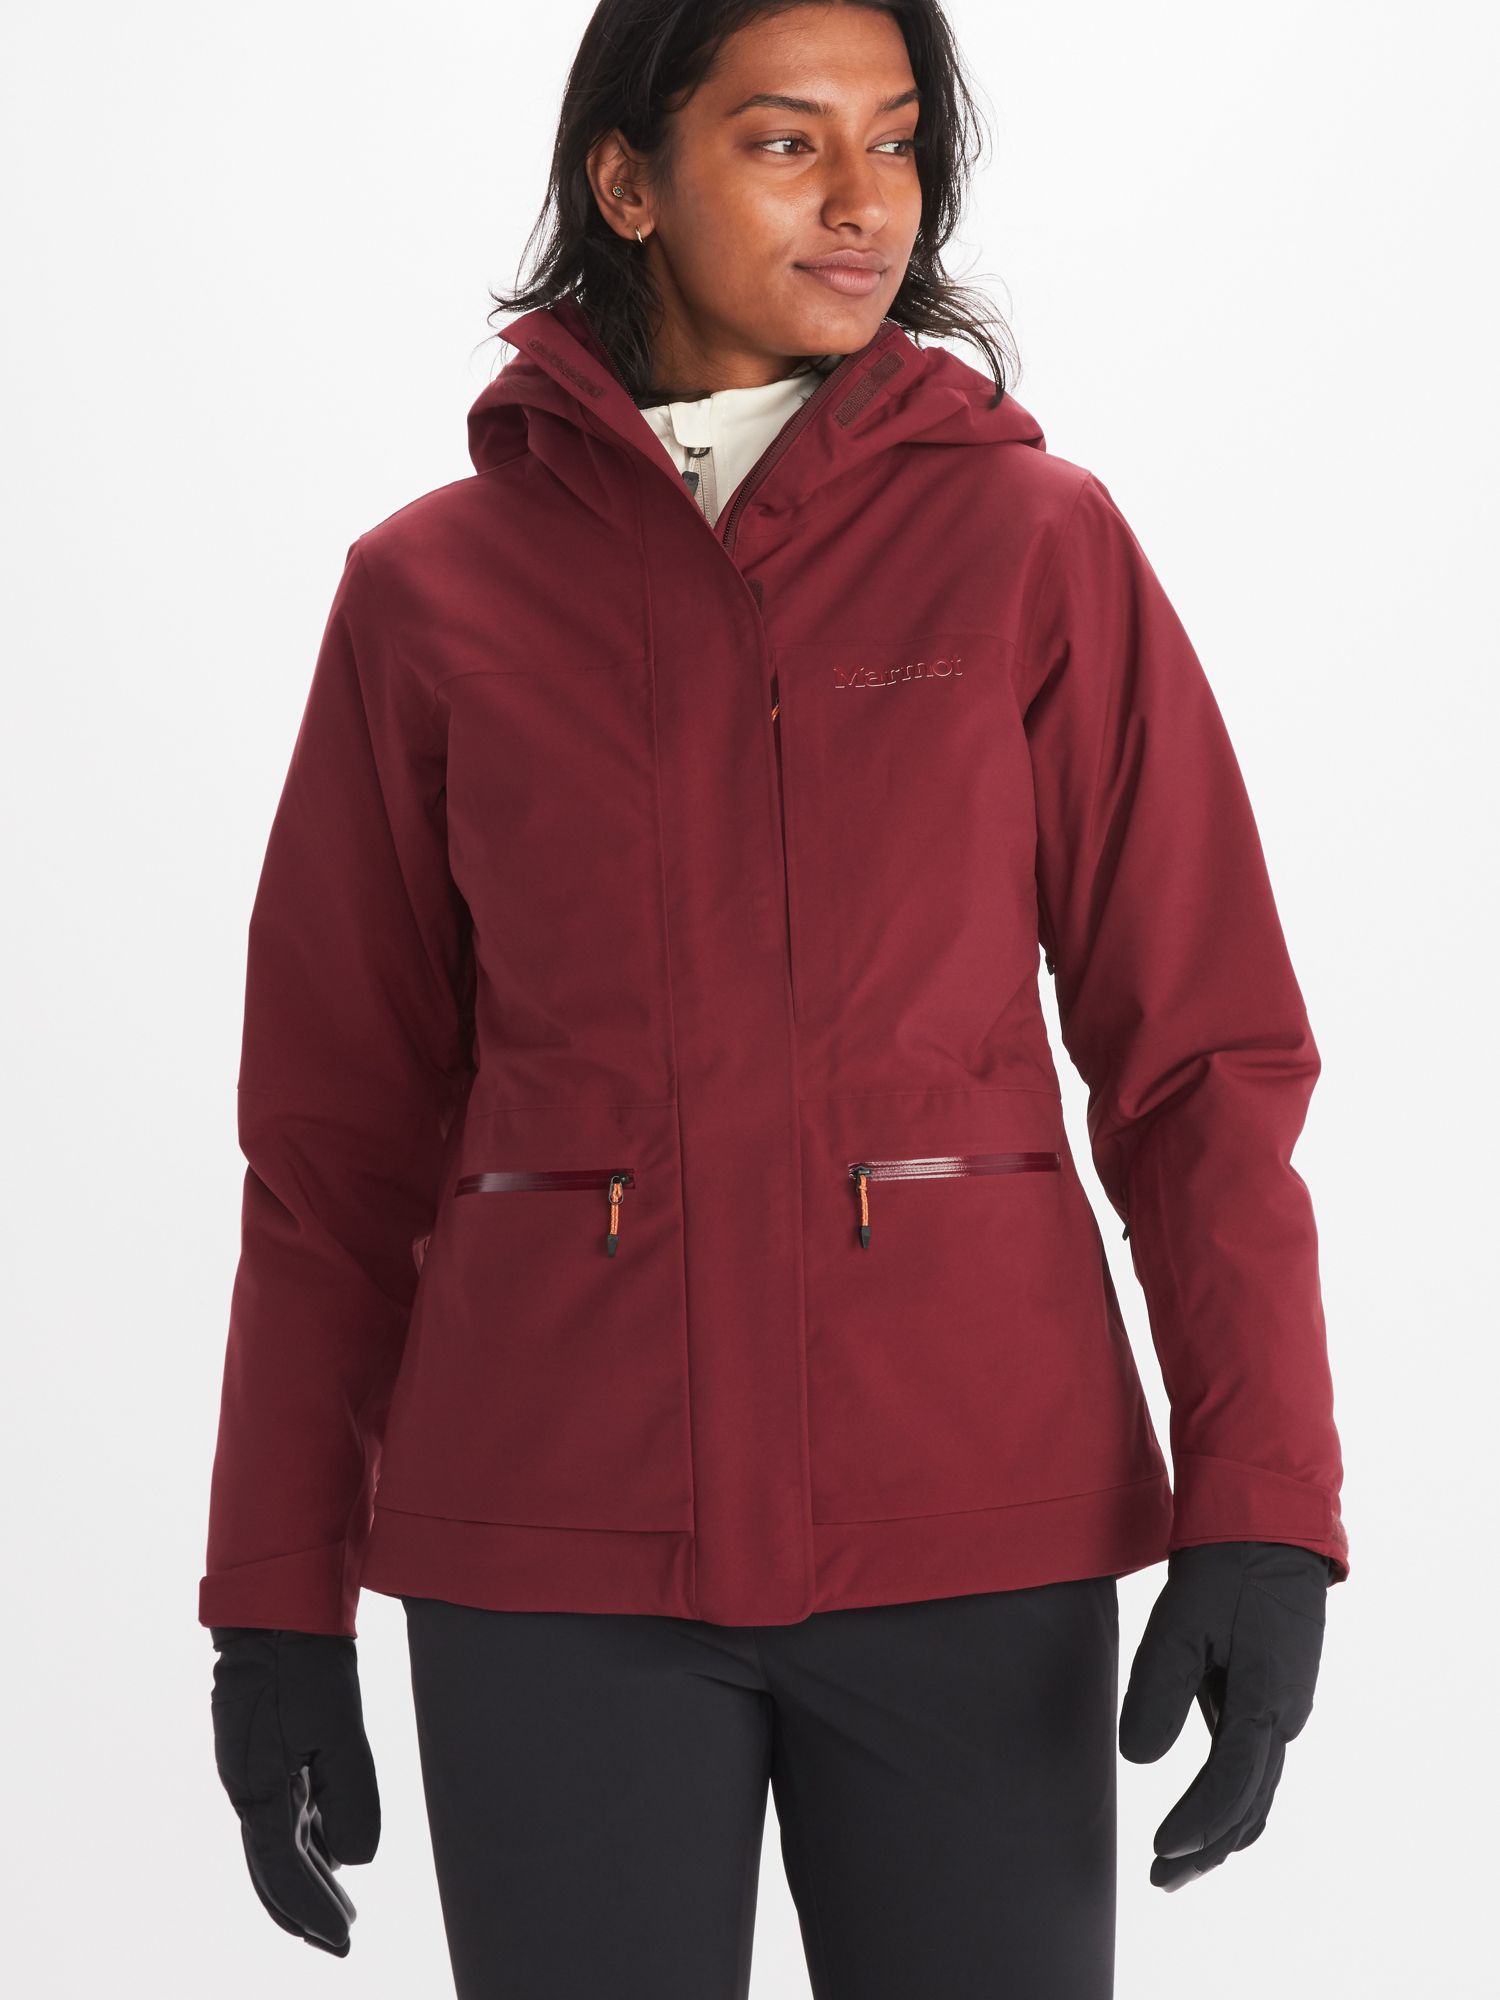 Women's Refuge Jacket | Marmot